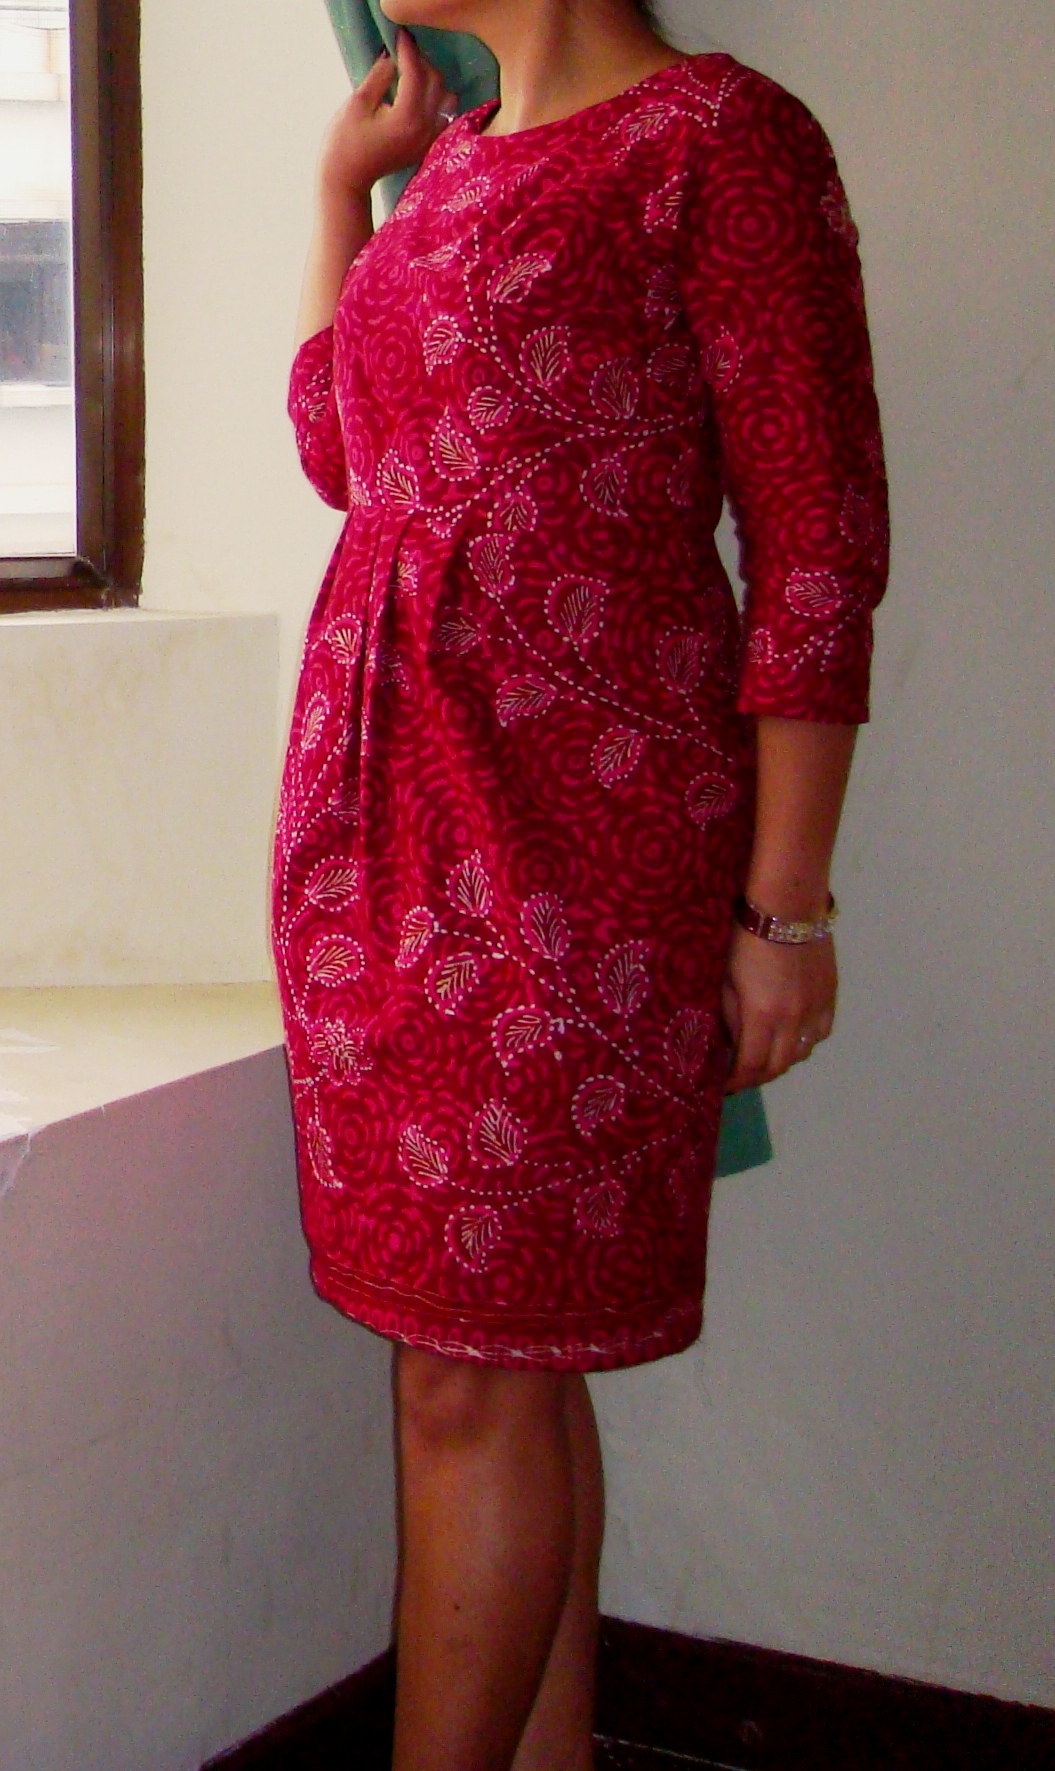 Madura Batik  Dress  Sewing Projects BurdaStyle com